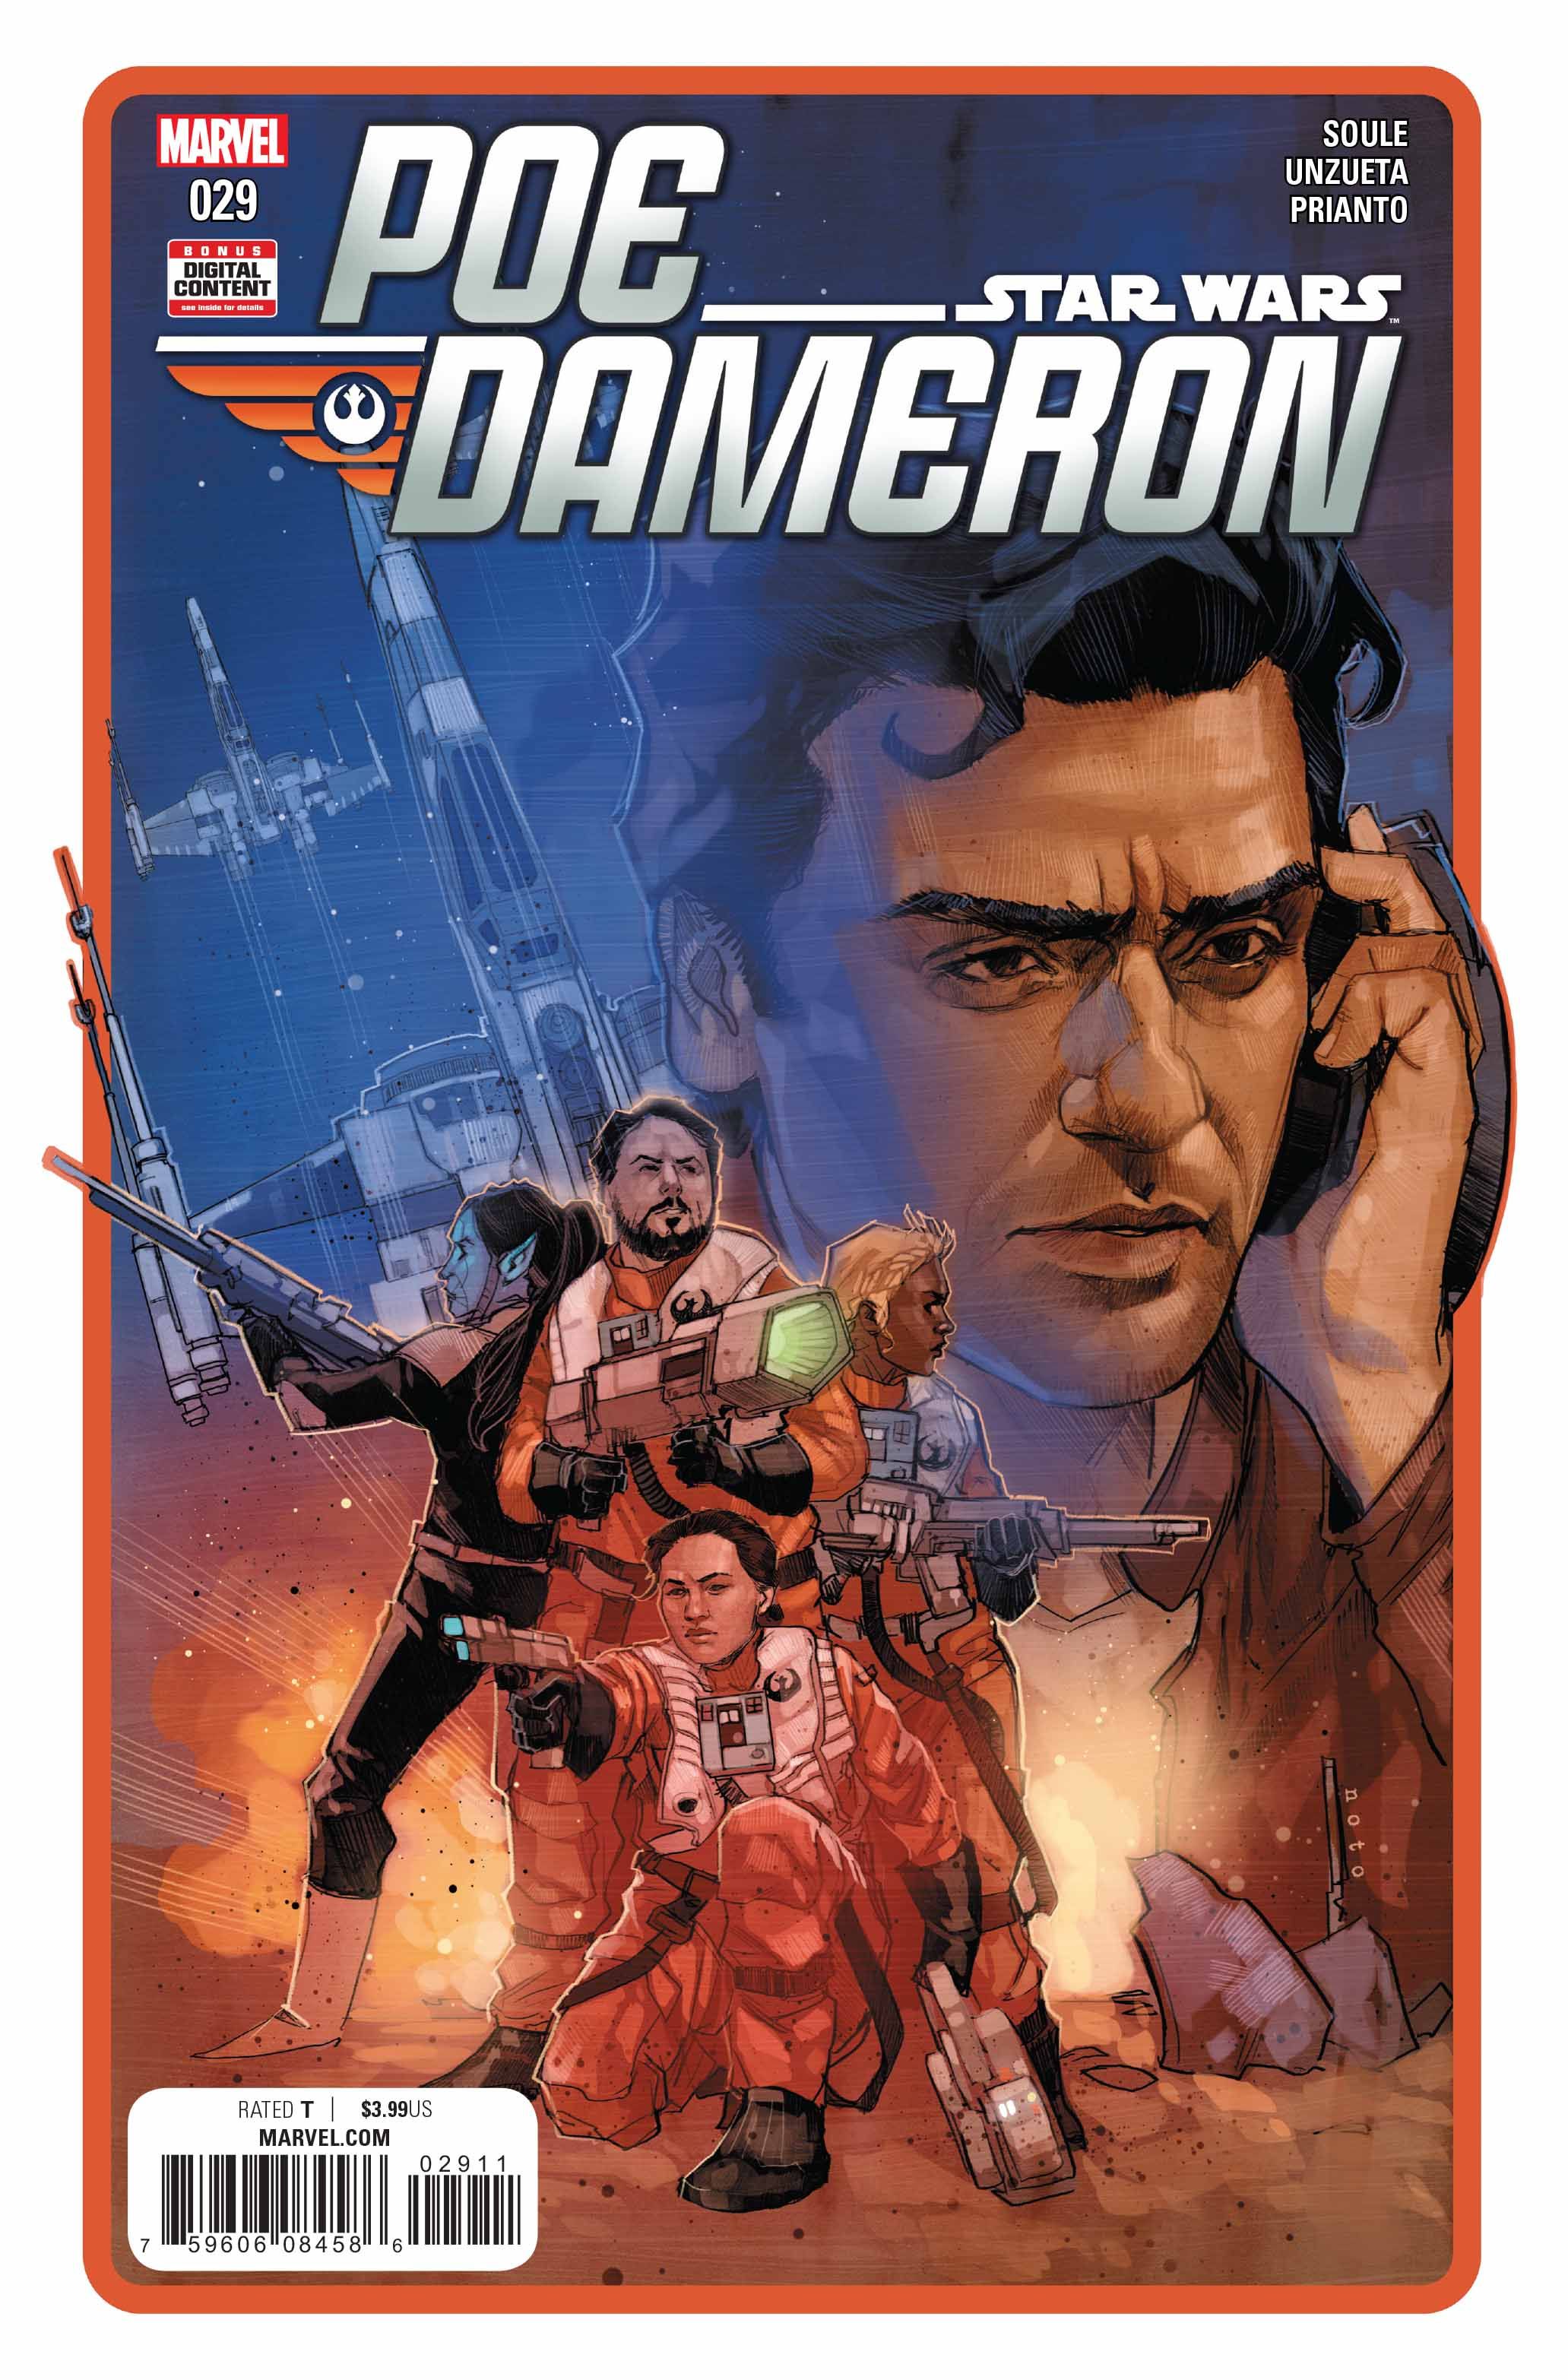 NM Star Wars MARVEL Comics Comic Book POE DAMERON #4